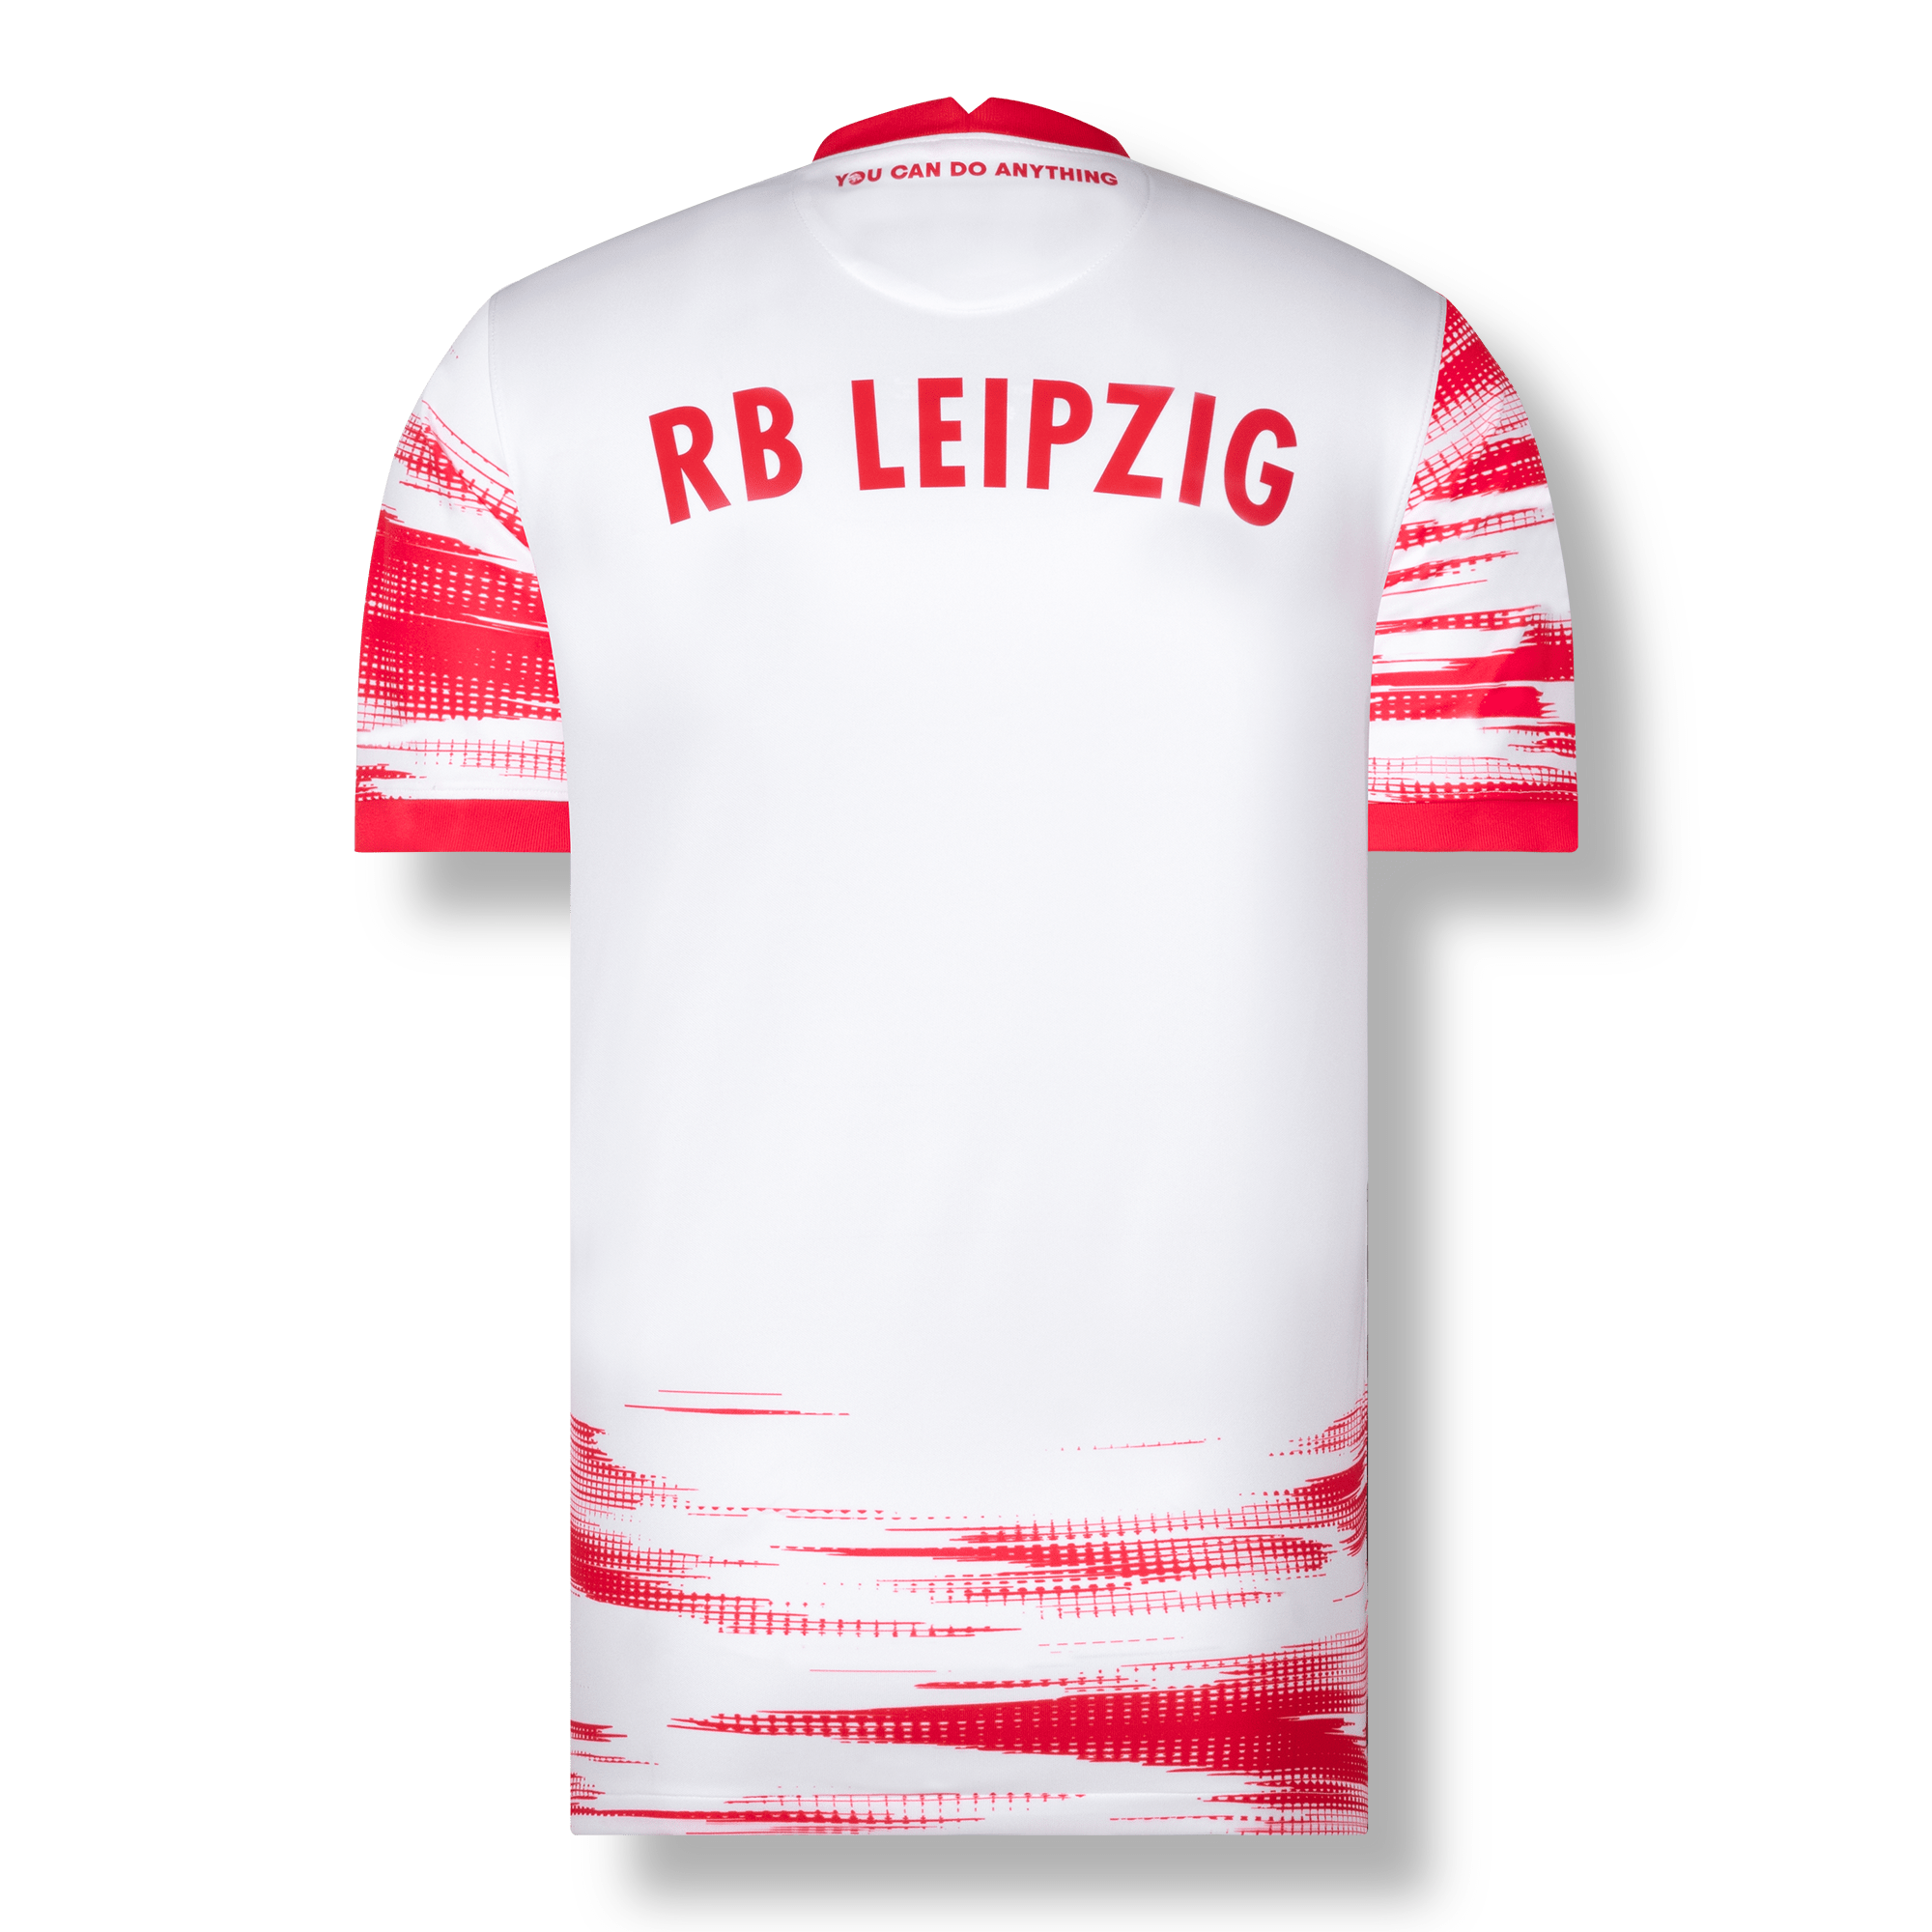 RB Leipzig 2021-22 Nike Home Kit Leaked » The Kitman